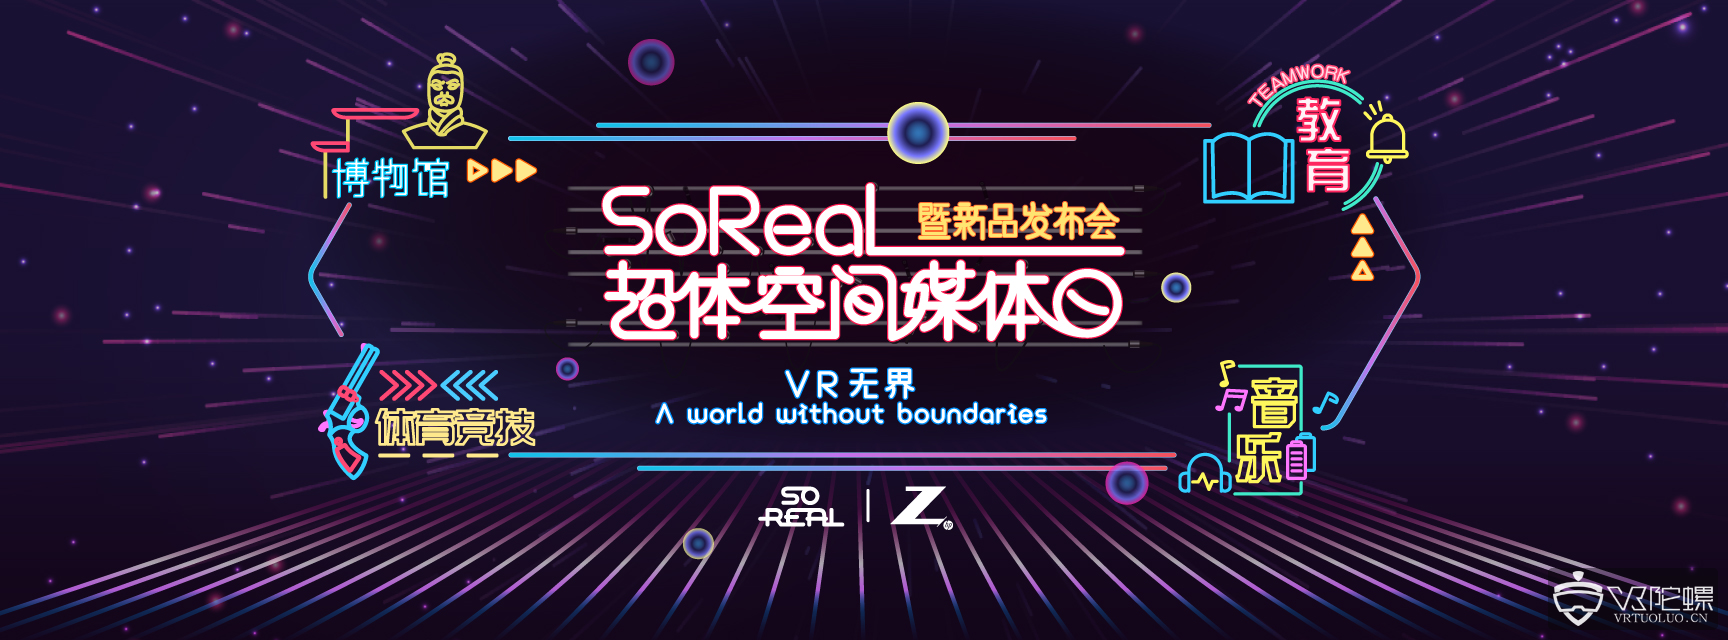 SoReal超体空间新品发布会公布多款VR游戏新作